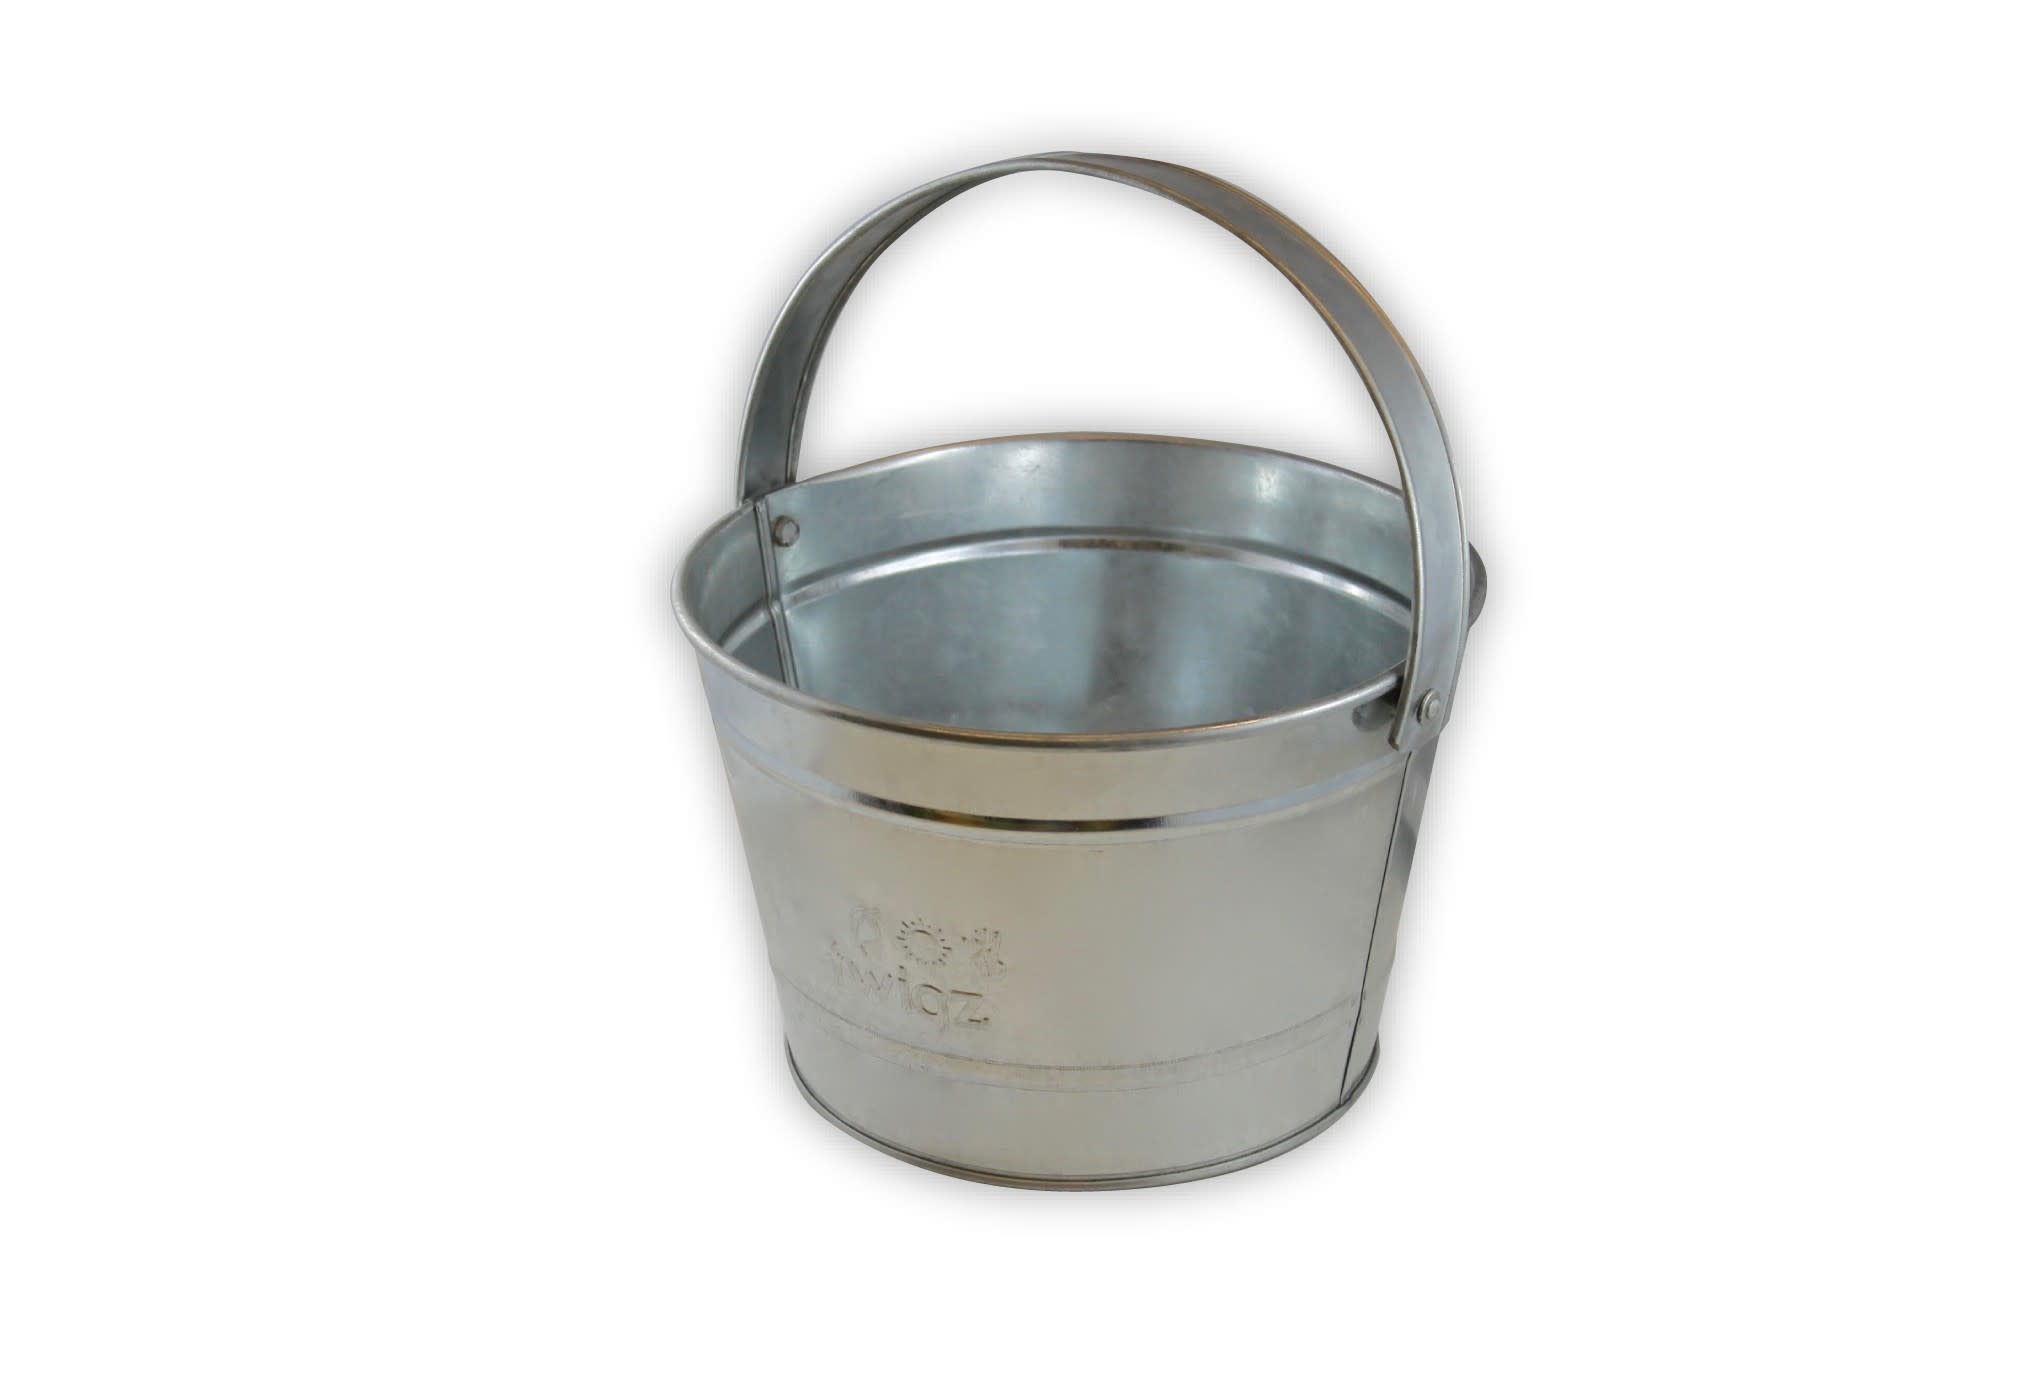 Twigz Twigz Pro Galvanised Steel 2L Bucket